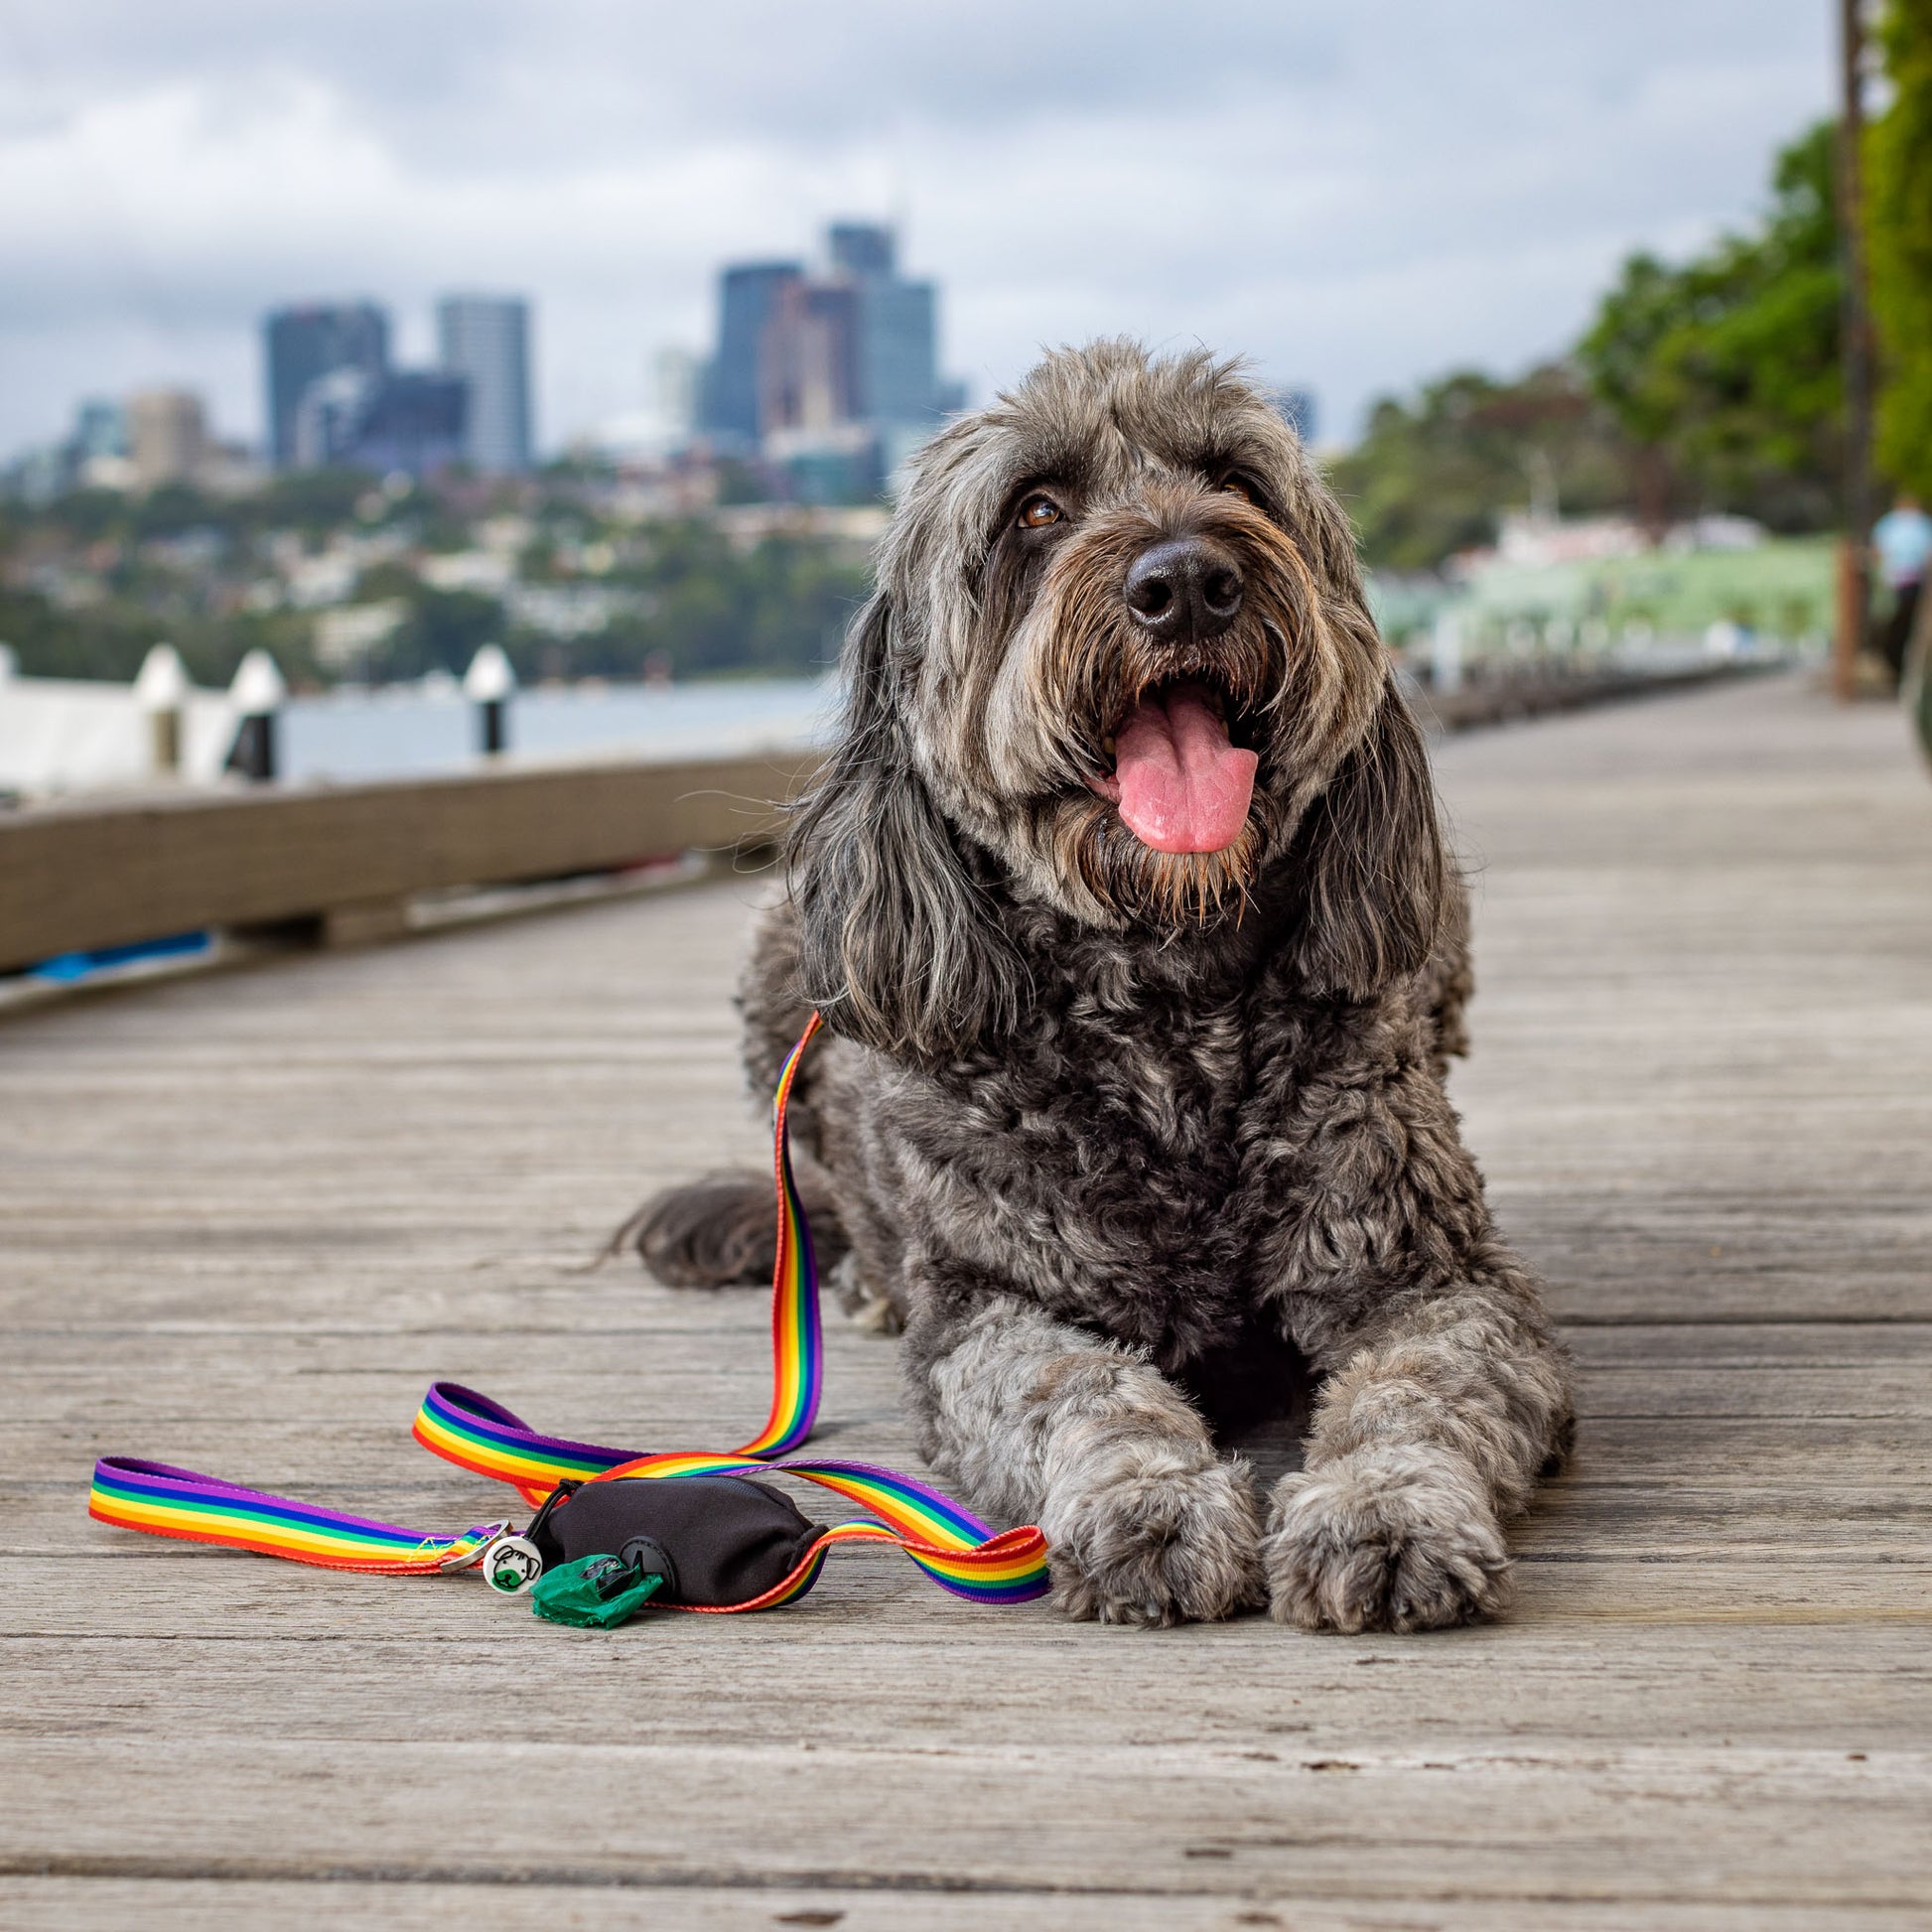 Groodle wearing rainbow dog leash